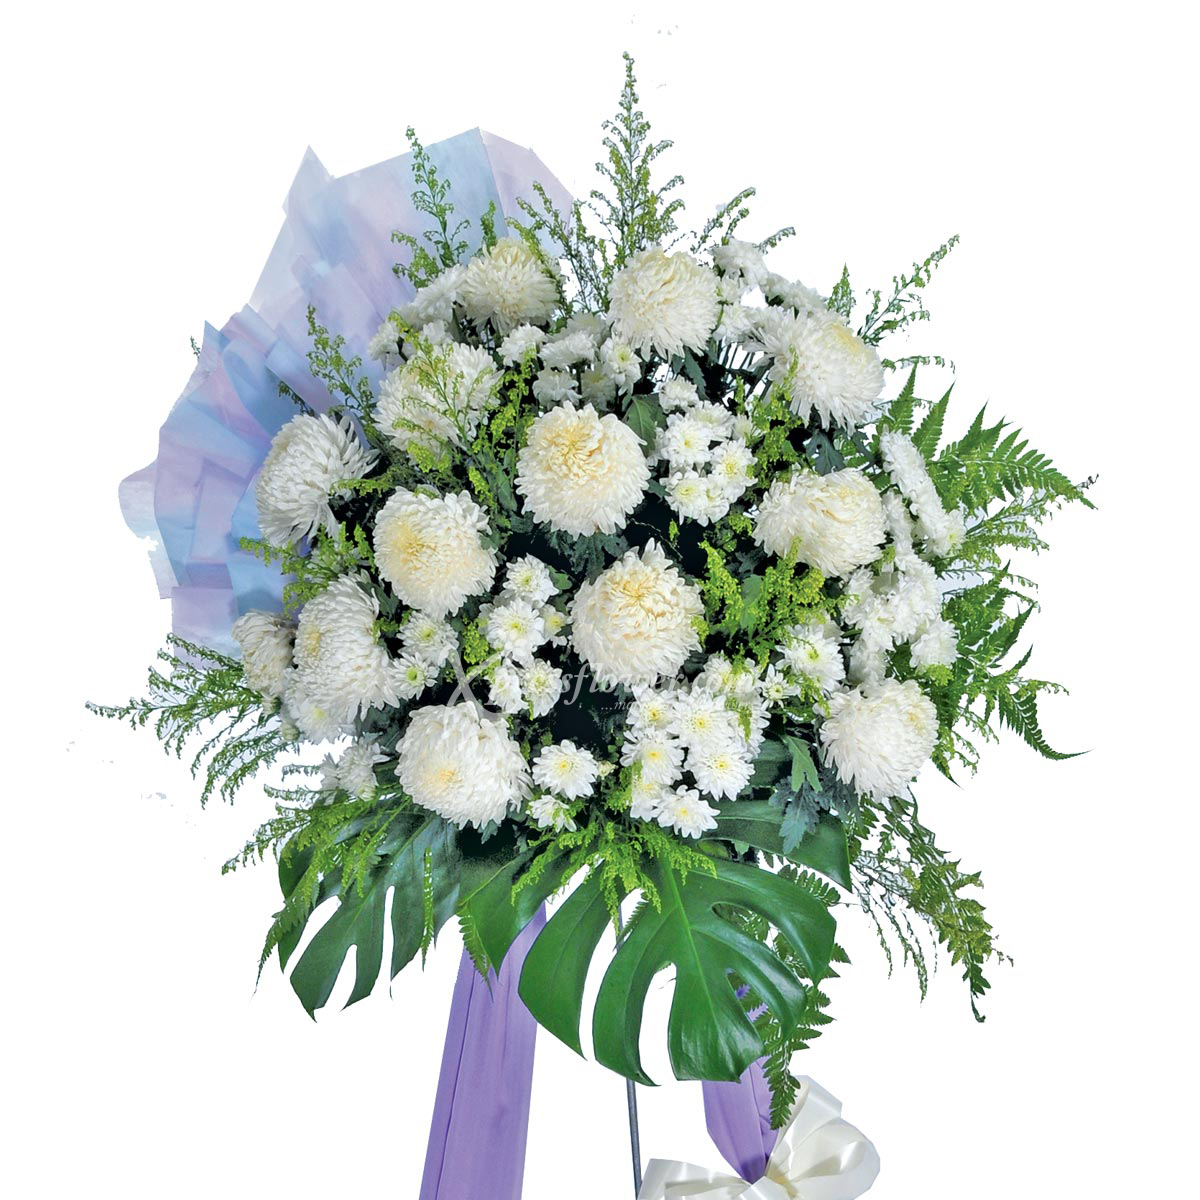 Grand Memorial (Funeral Condolence Flower Wreath)